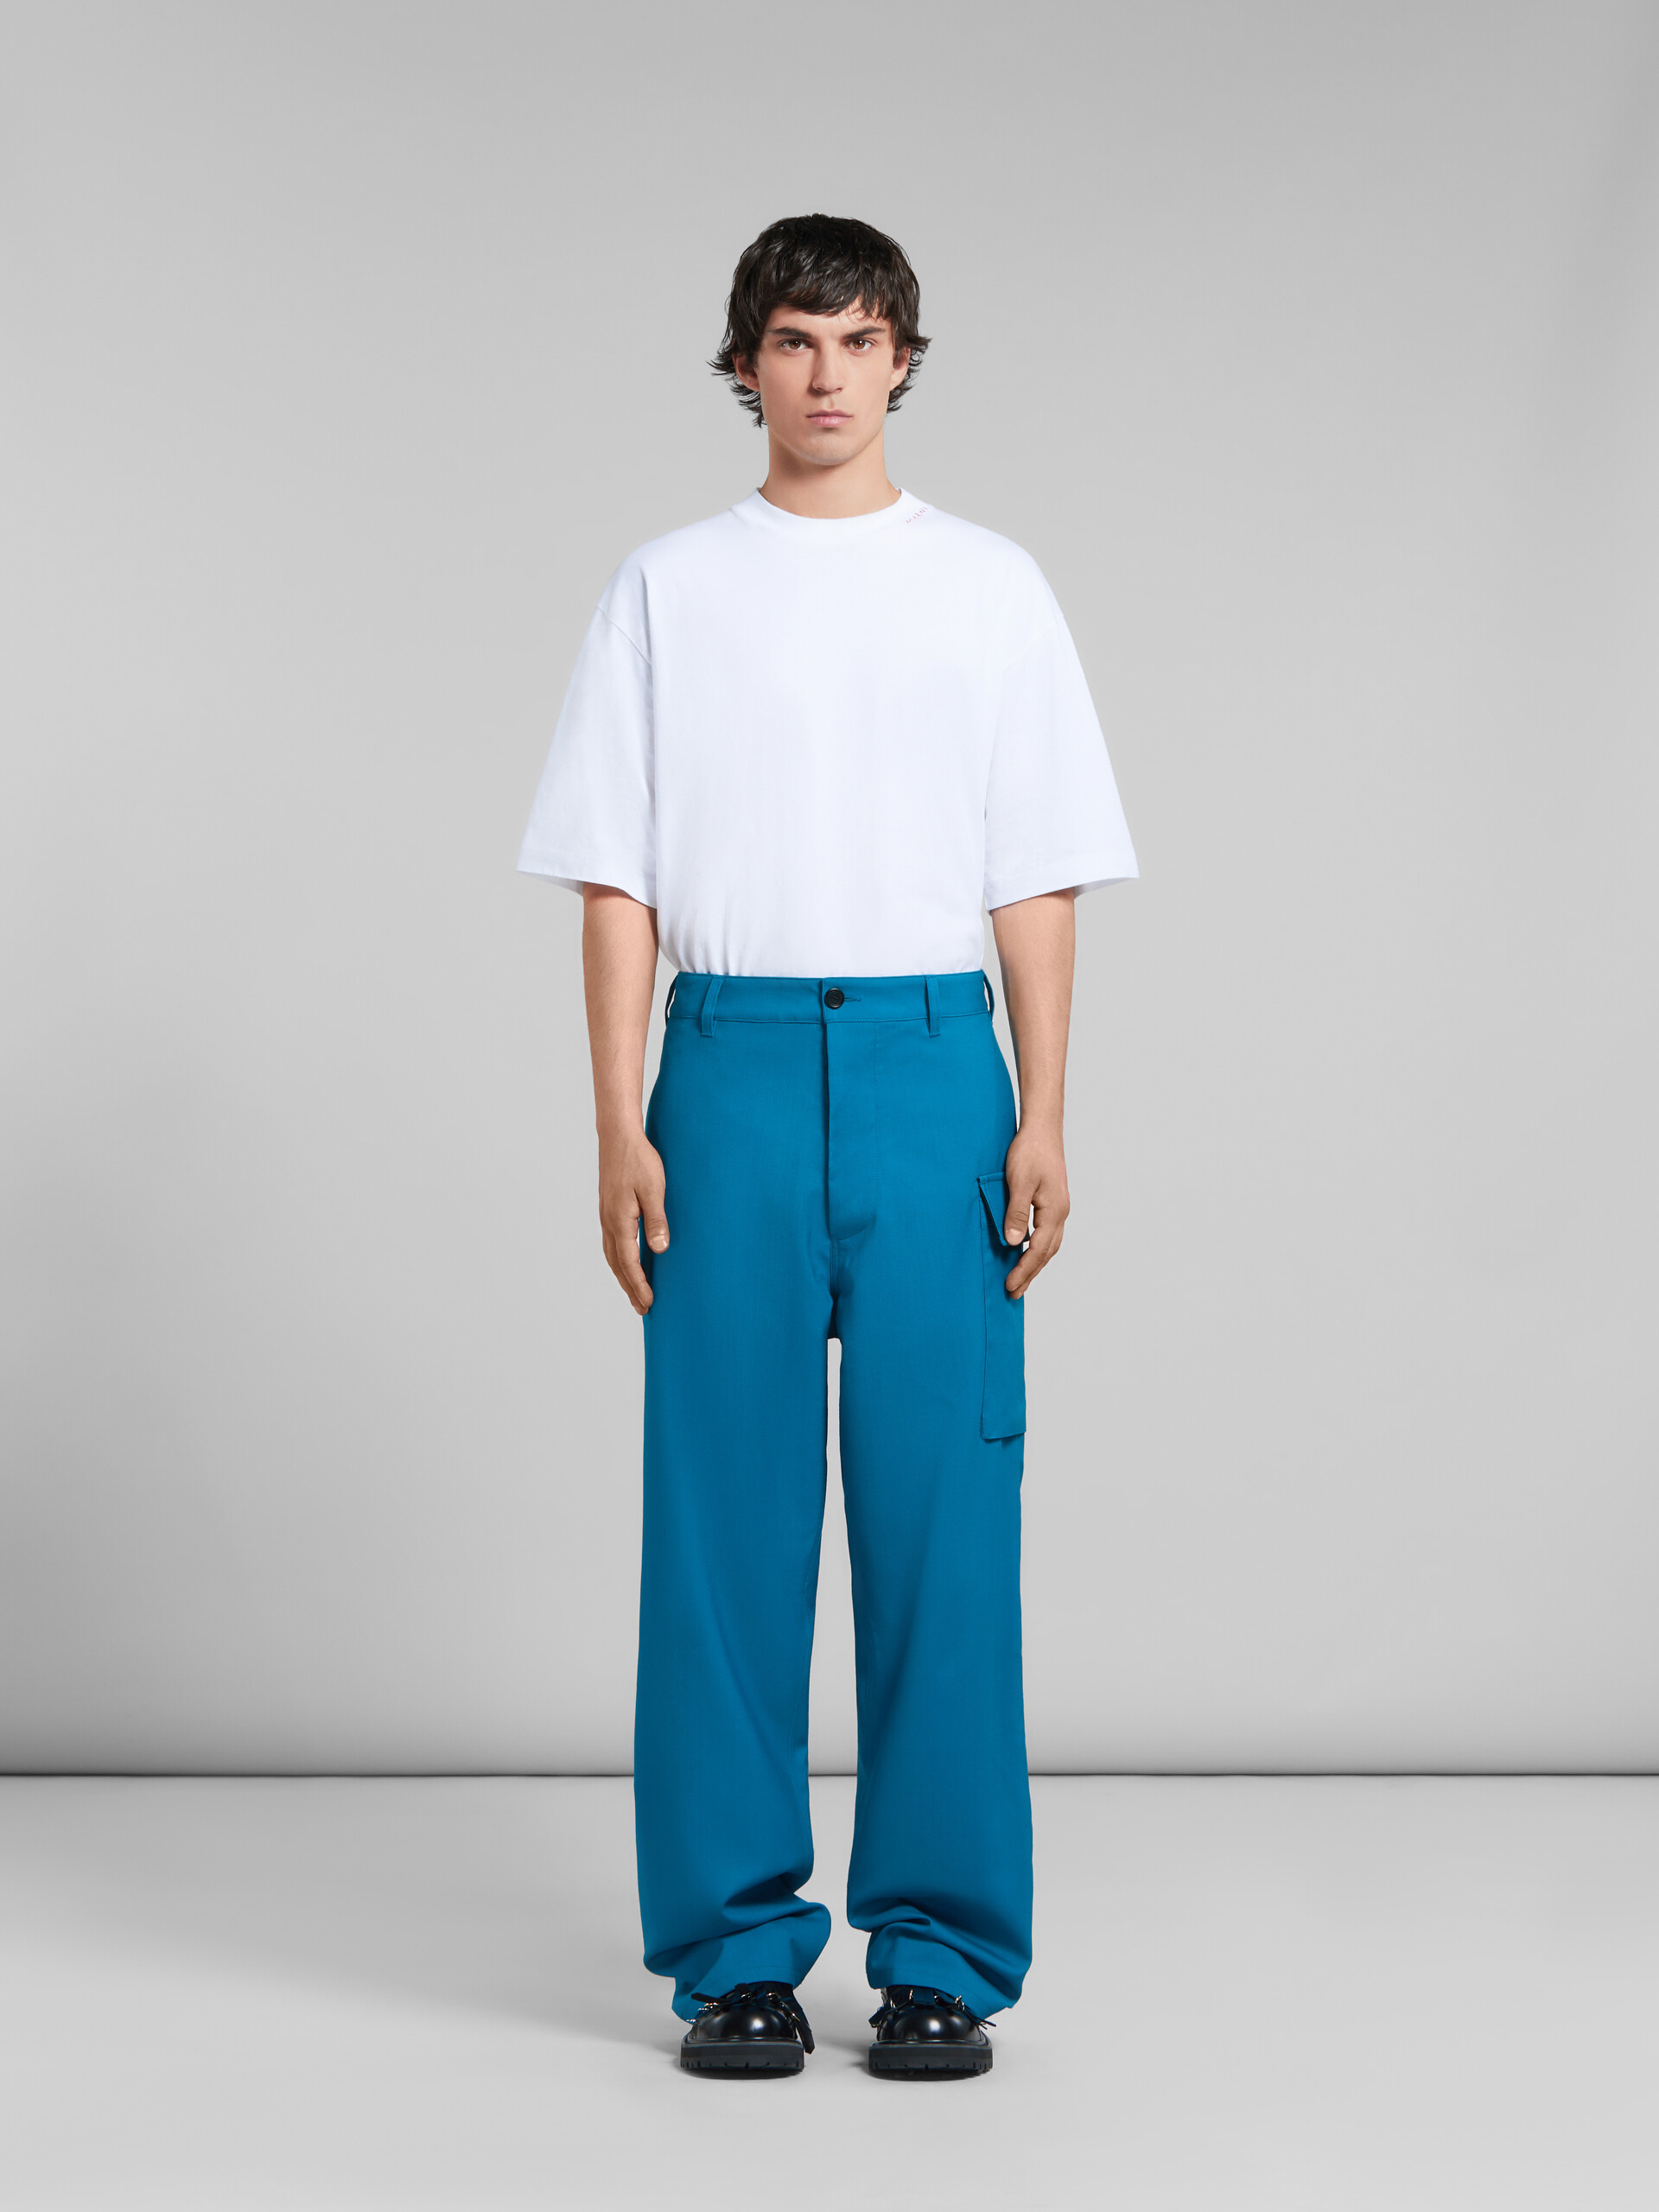 Pantaloni in fresco lana blu petrolio con tasche cargo - Pantaloni - Image 2